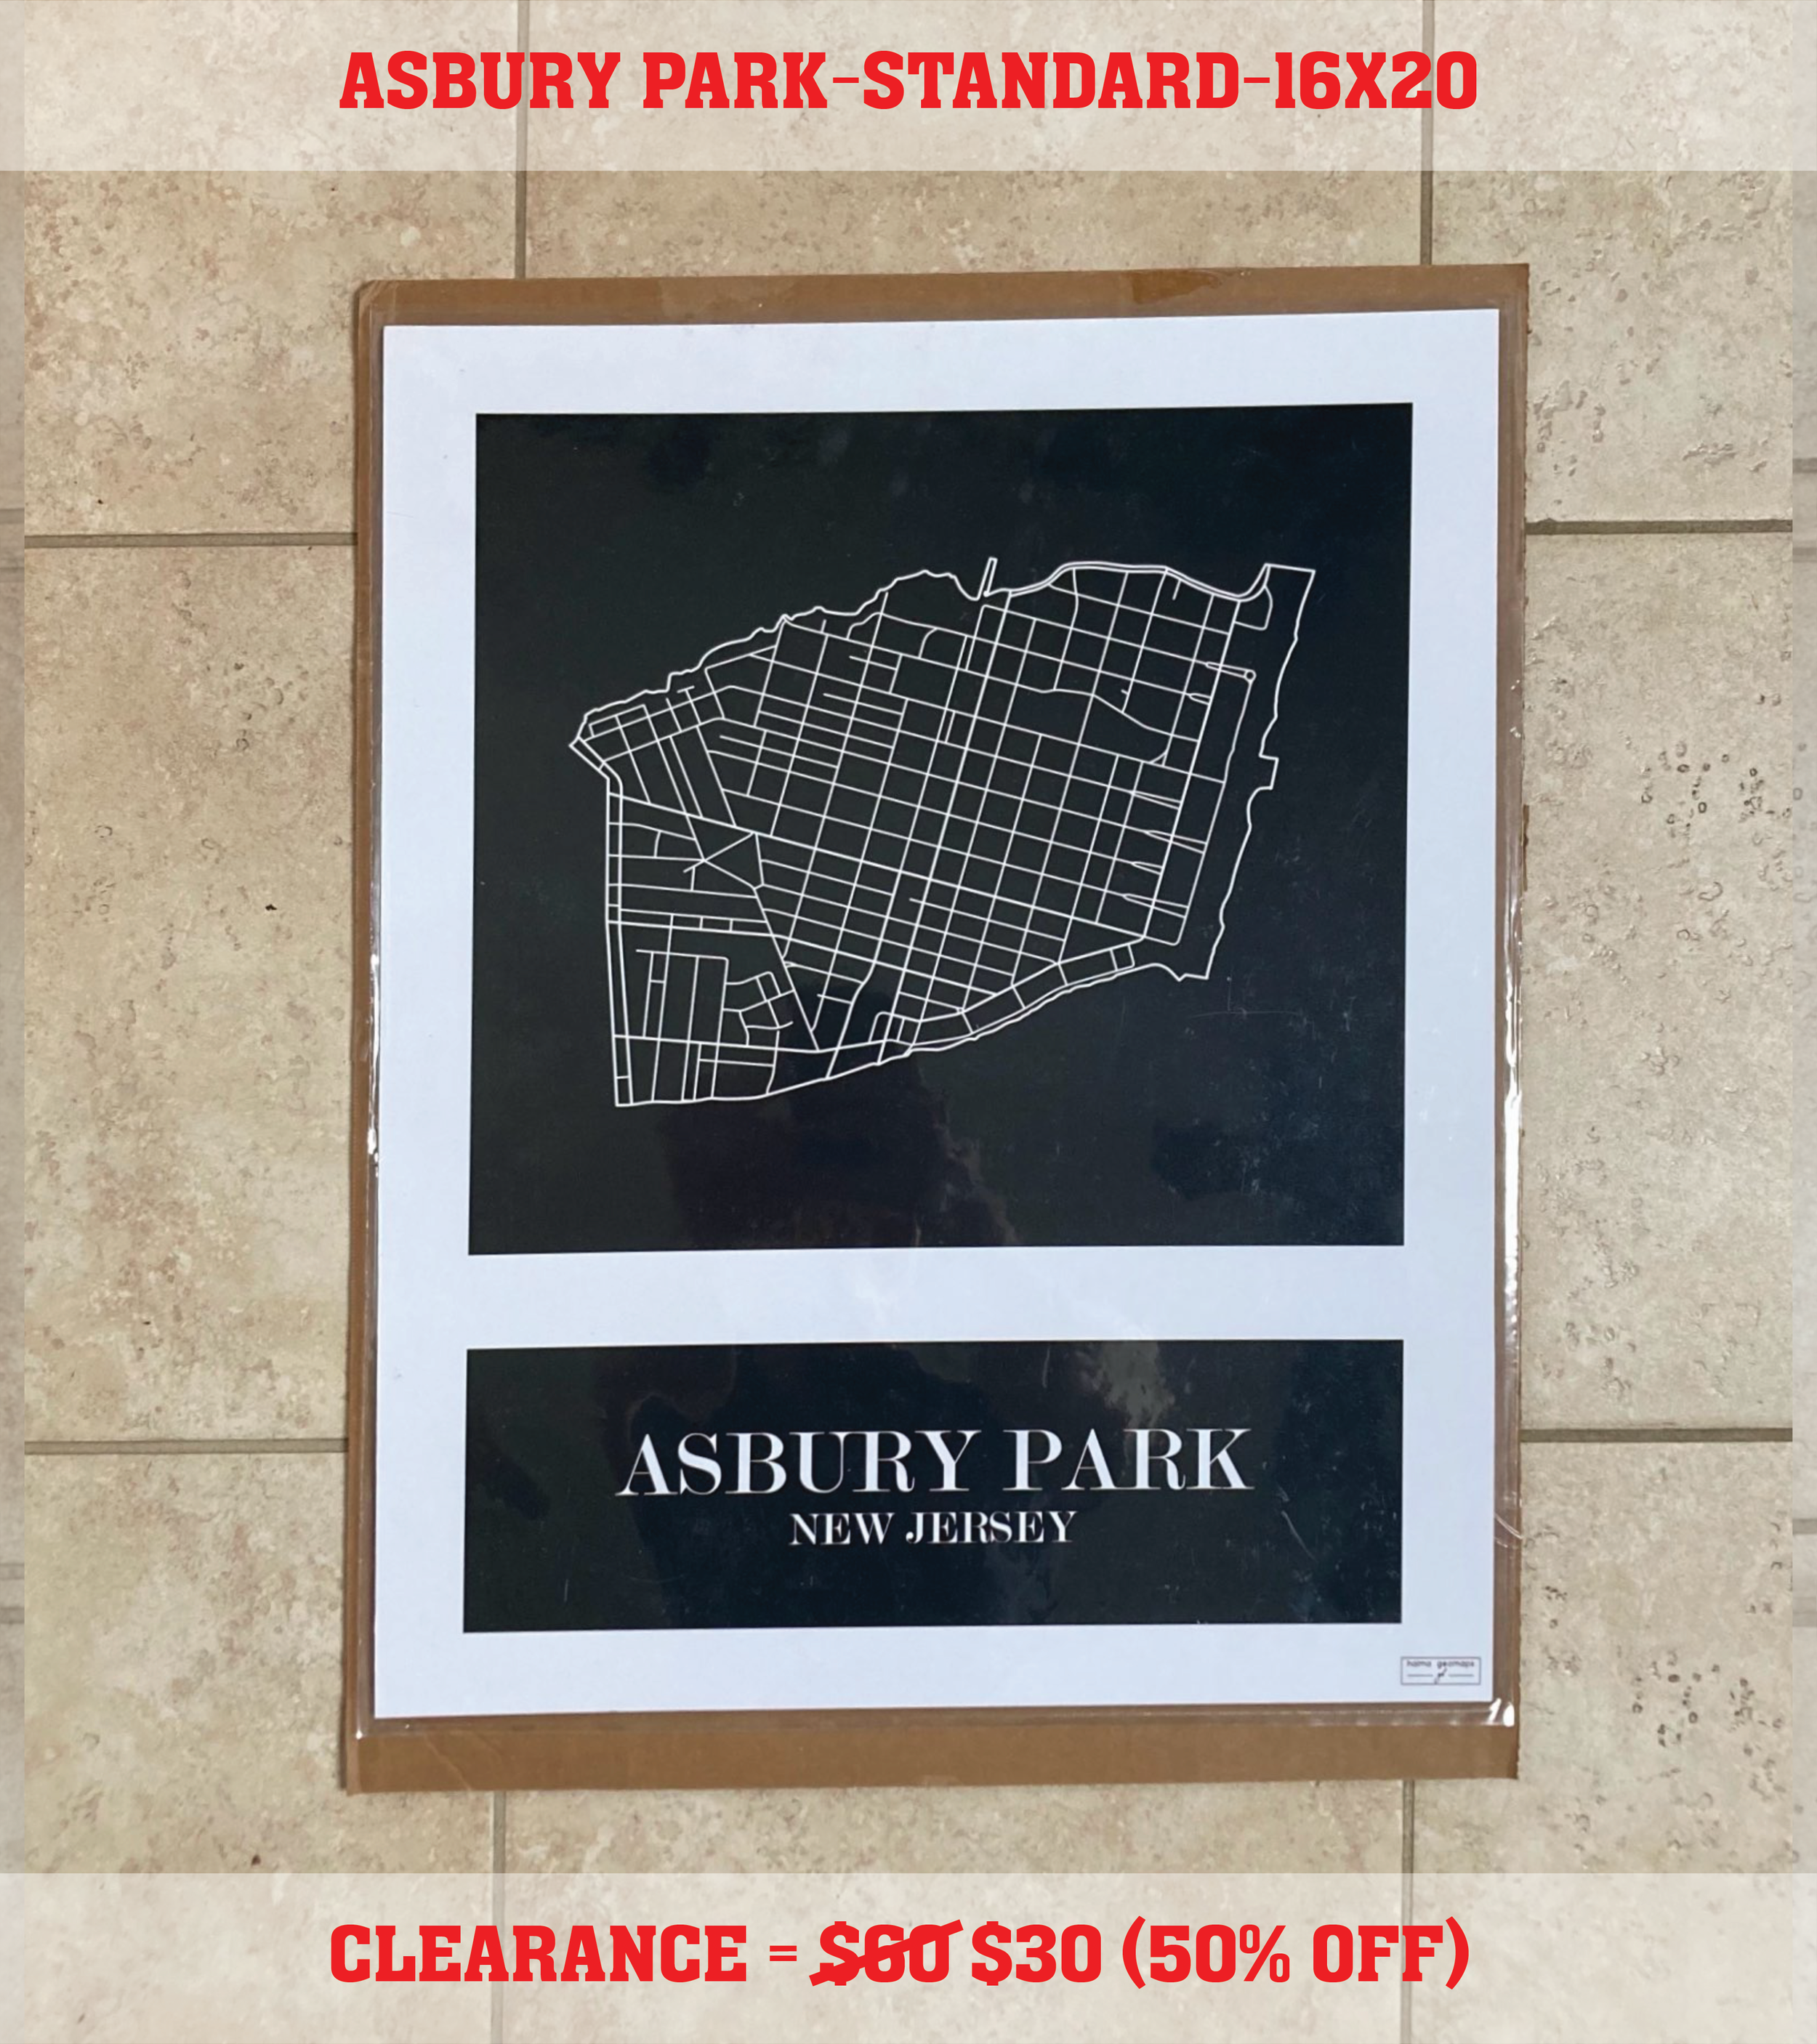 Asbury Park (16x20) Standard